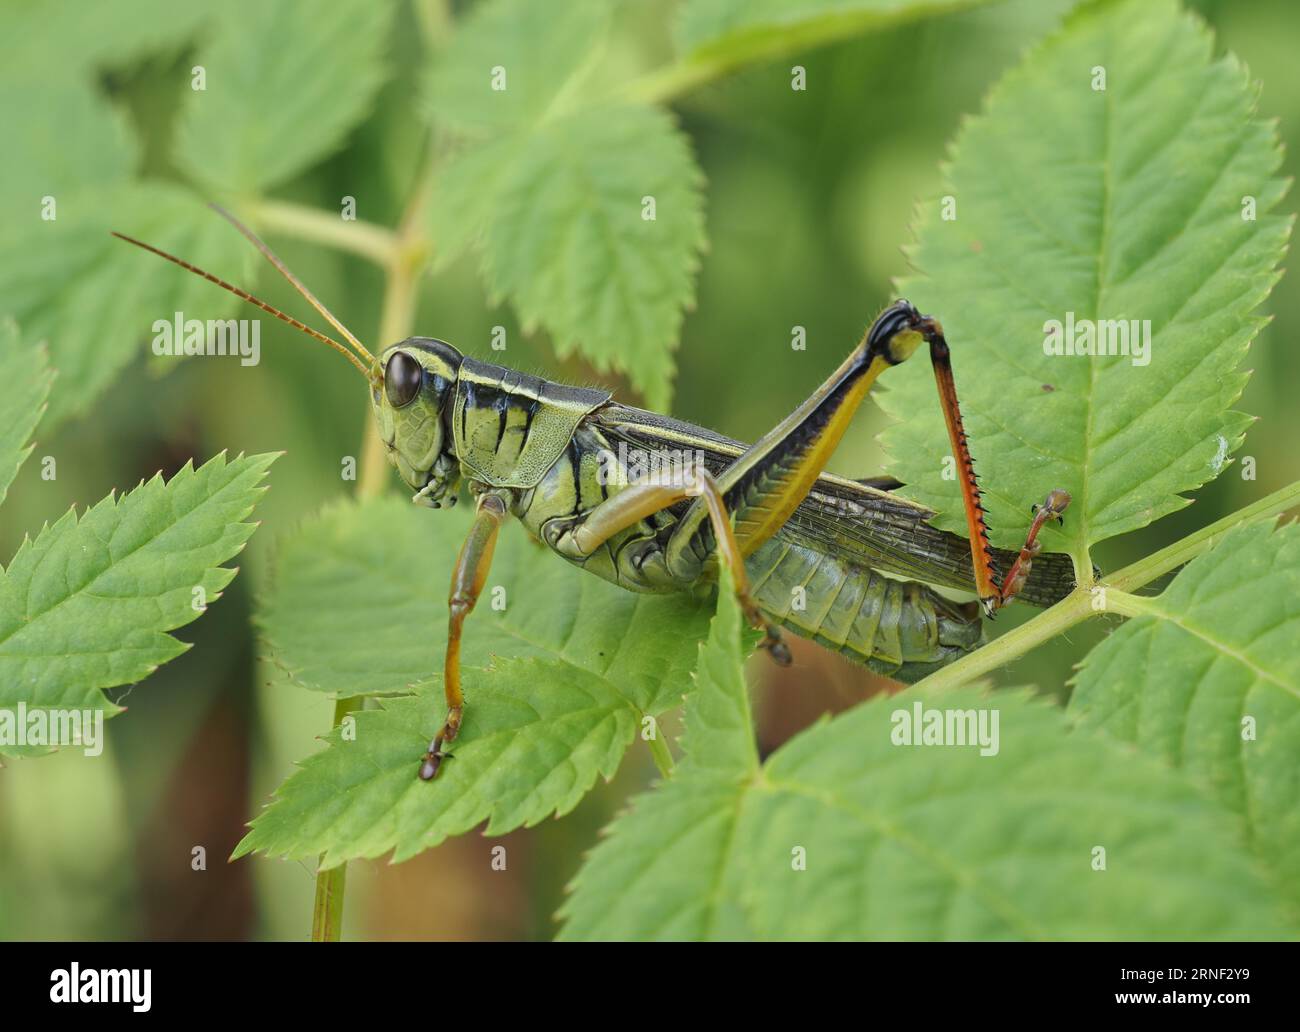 Two-stripped Grasshopper. Scientific name: Melanoplus bivittatus. Family: Acrididae. Subfamily: Melanoplinae. Order: Orthoptera. Kingdom: Animalia. Stock Photo